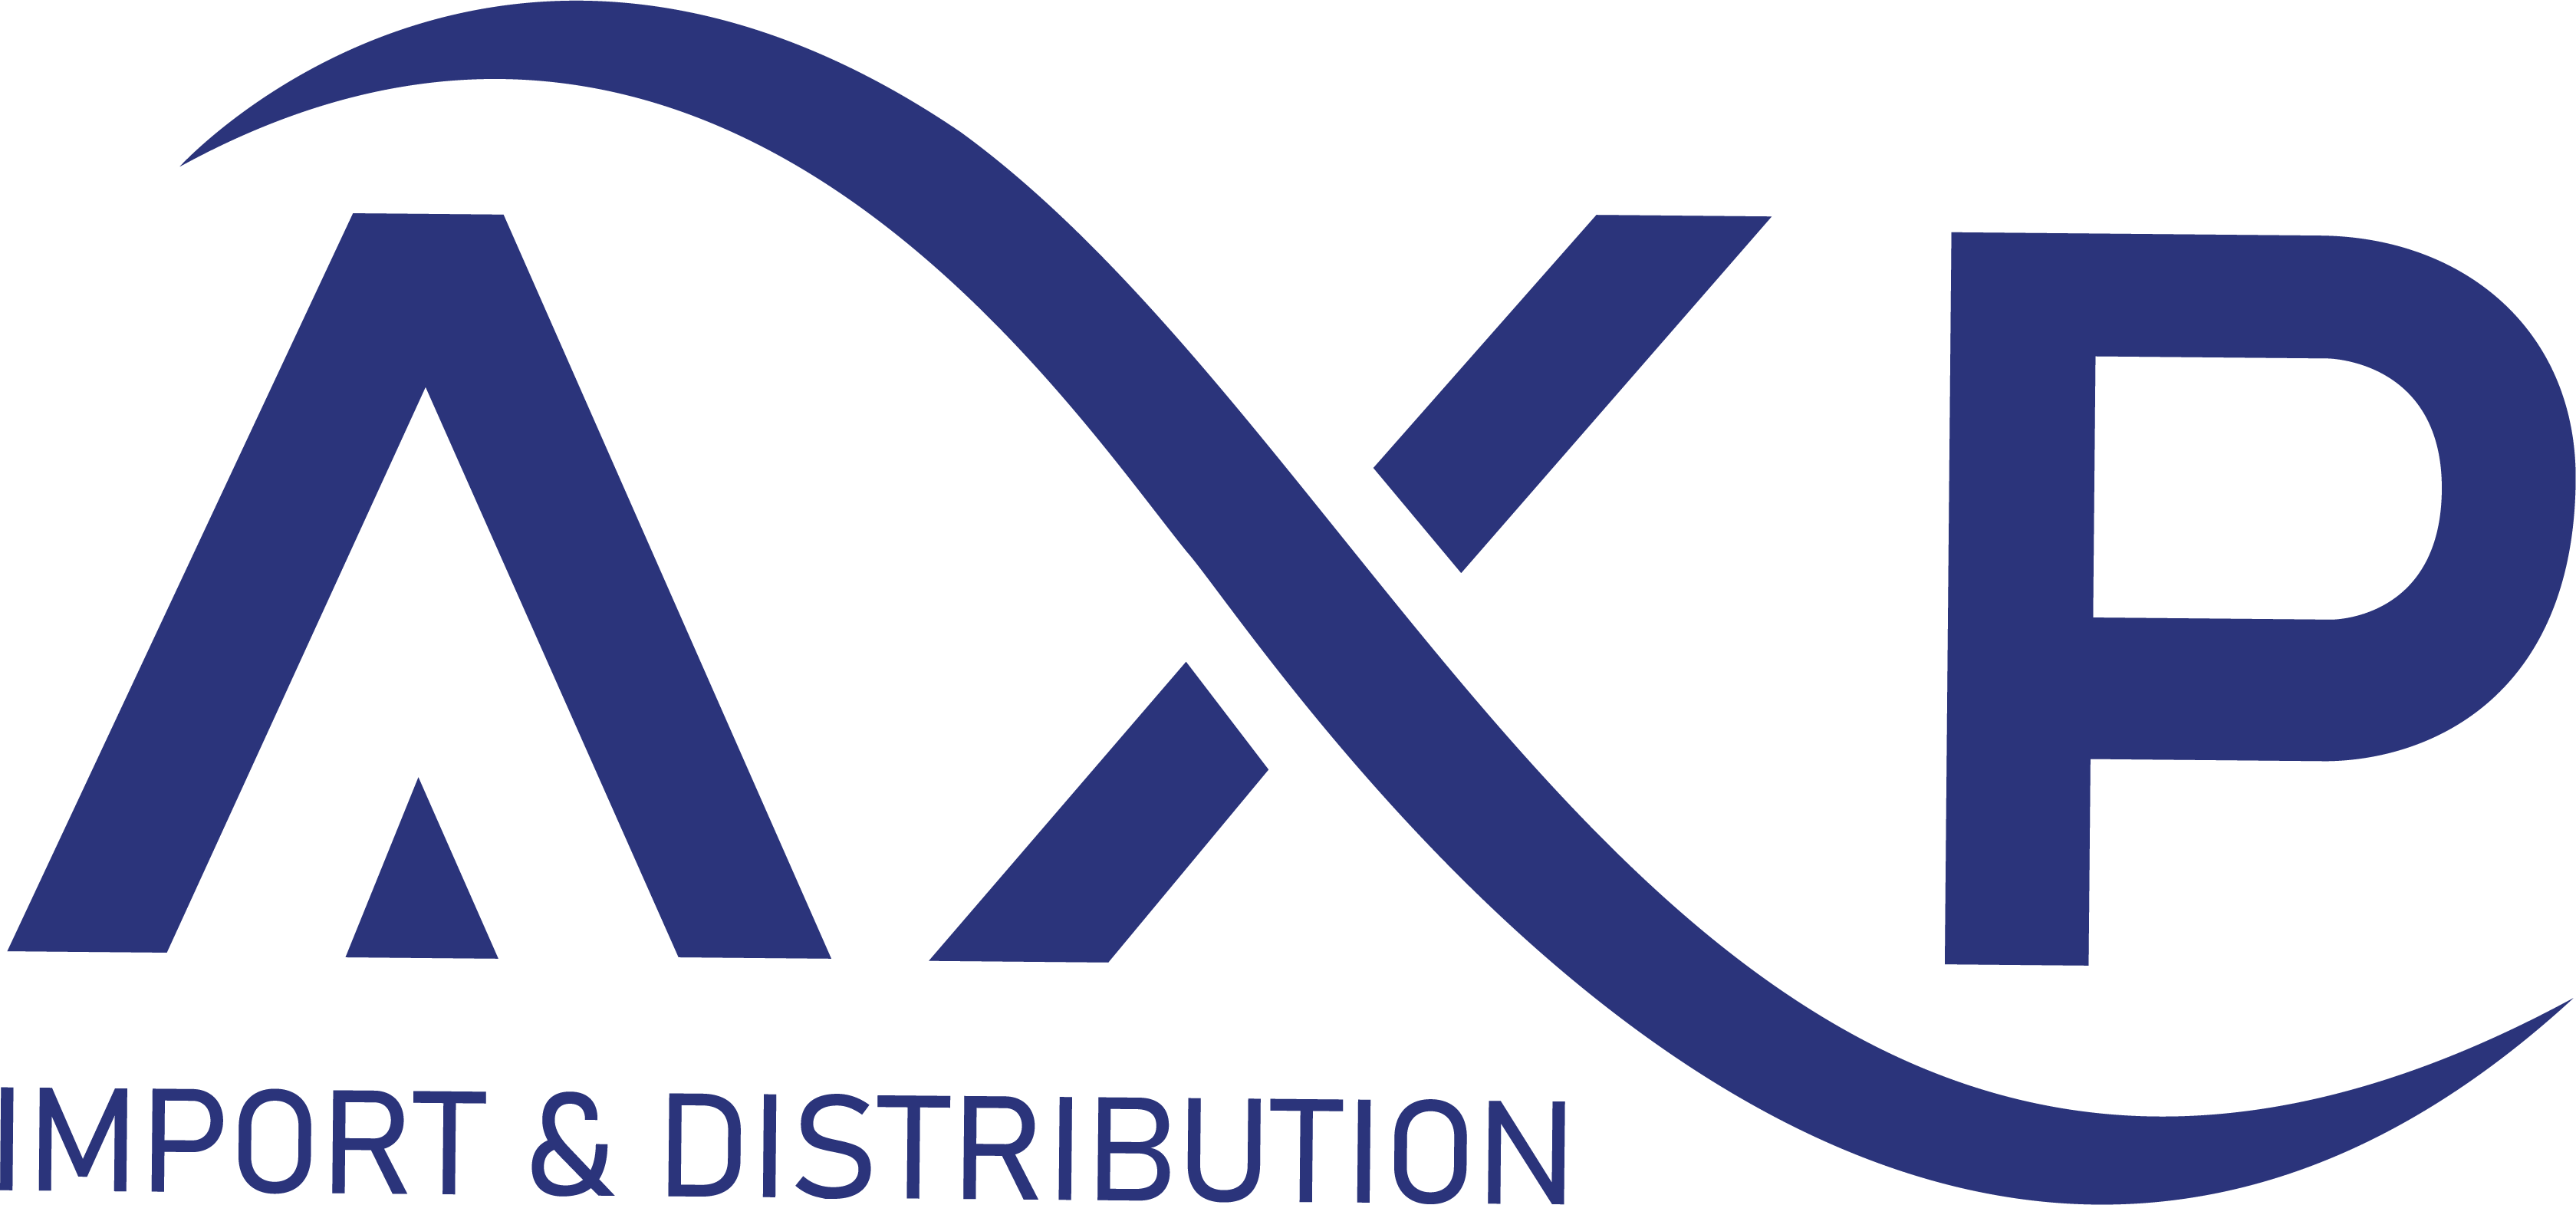 AXP IMPORT & DISTRIBUTION